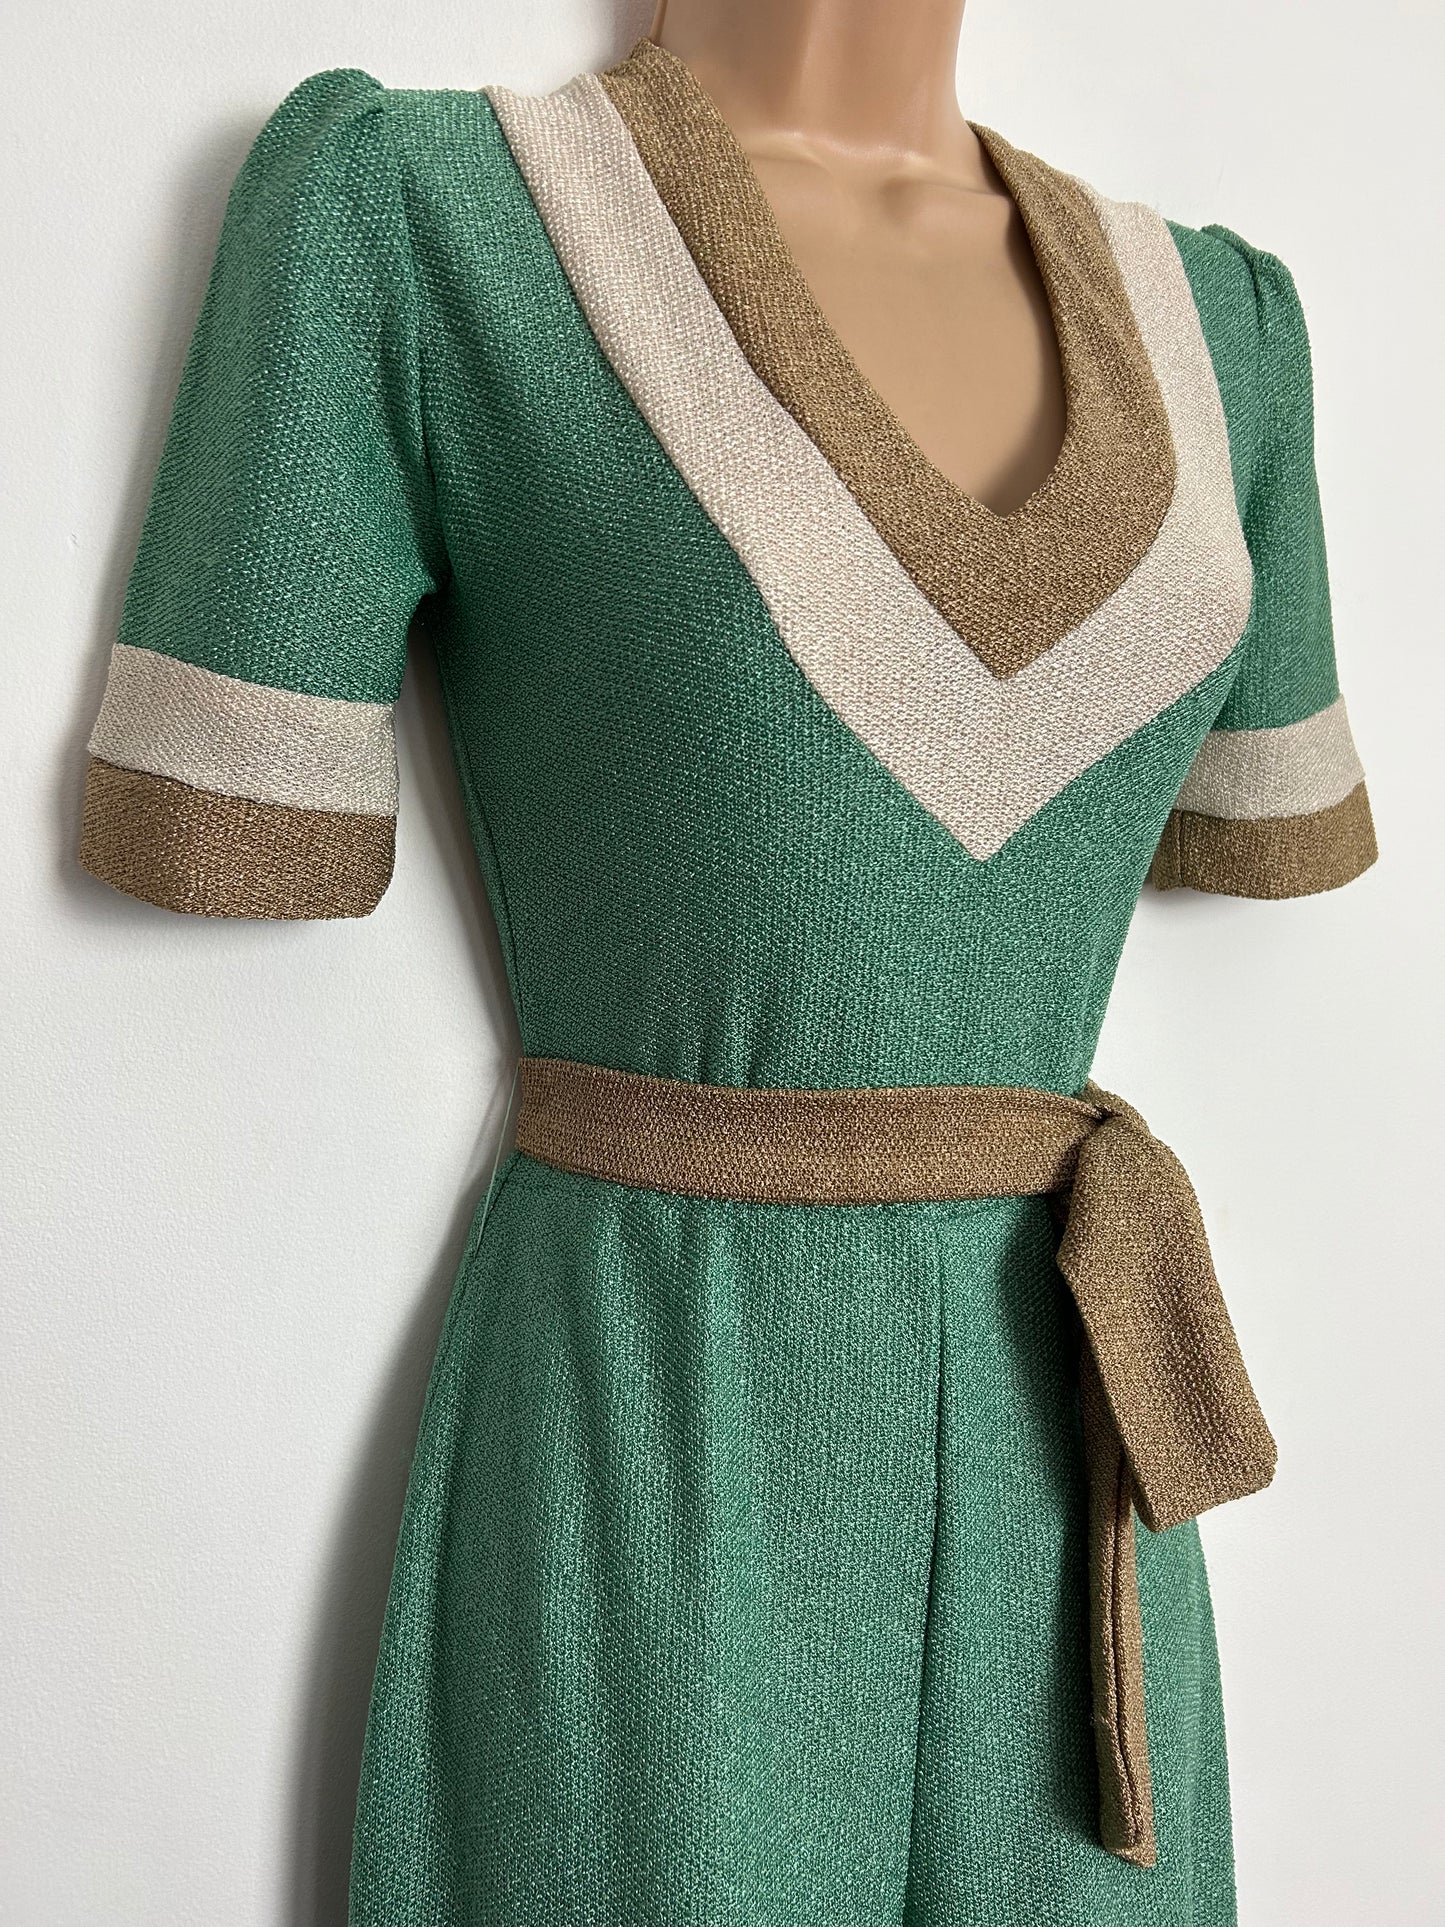 Vintage 1970s VAN ALLEN UK Size 6-8 Green Beige & Brown Stripe Short Sleeve Belted Wide Leg Palazzo Jumpsuit